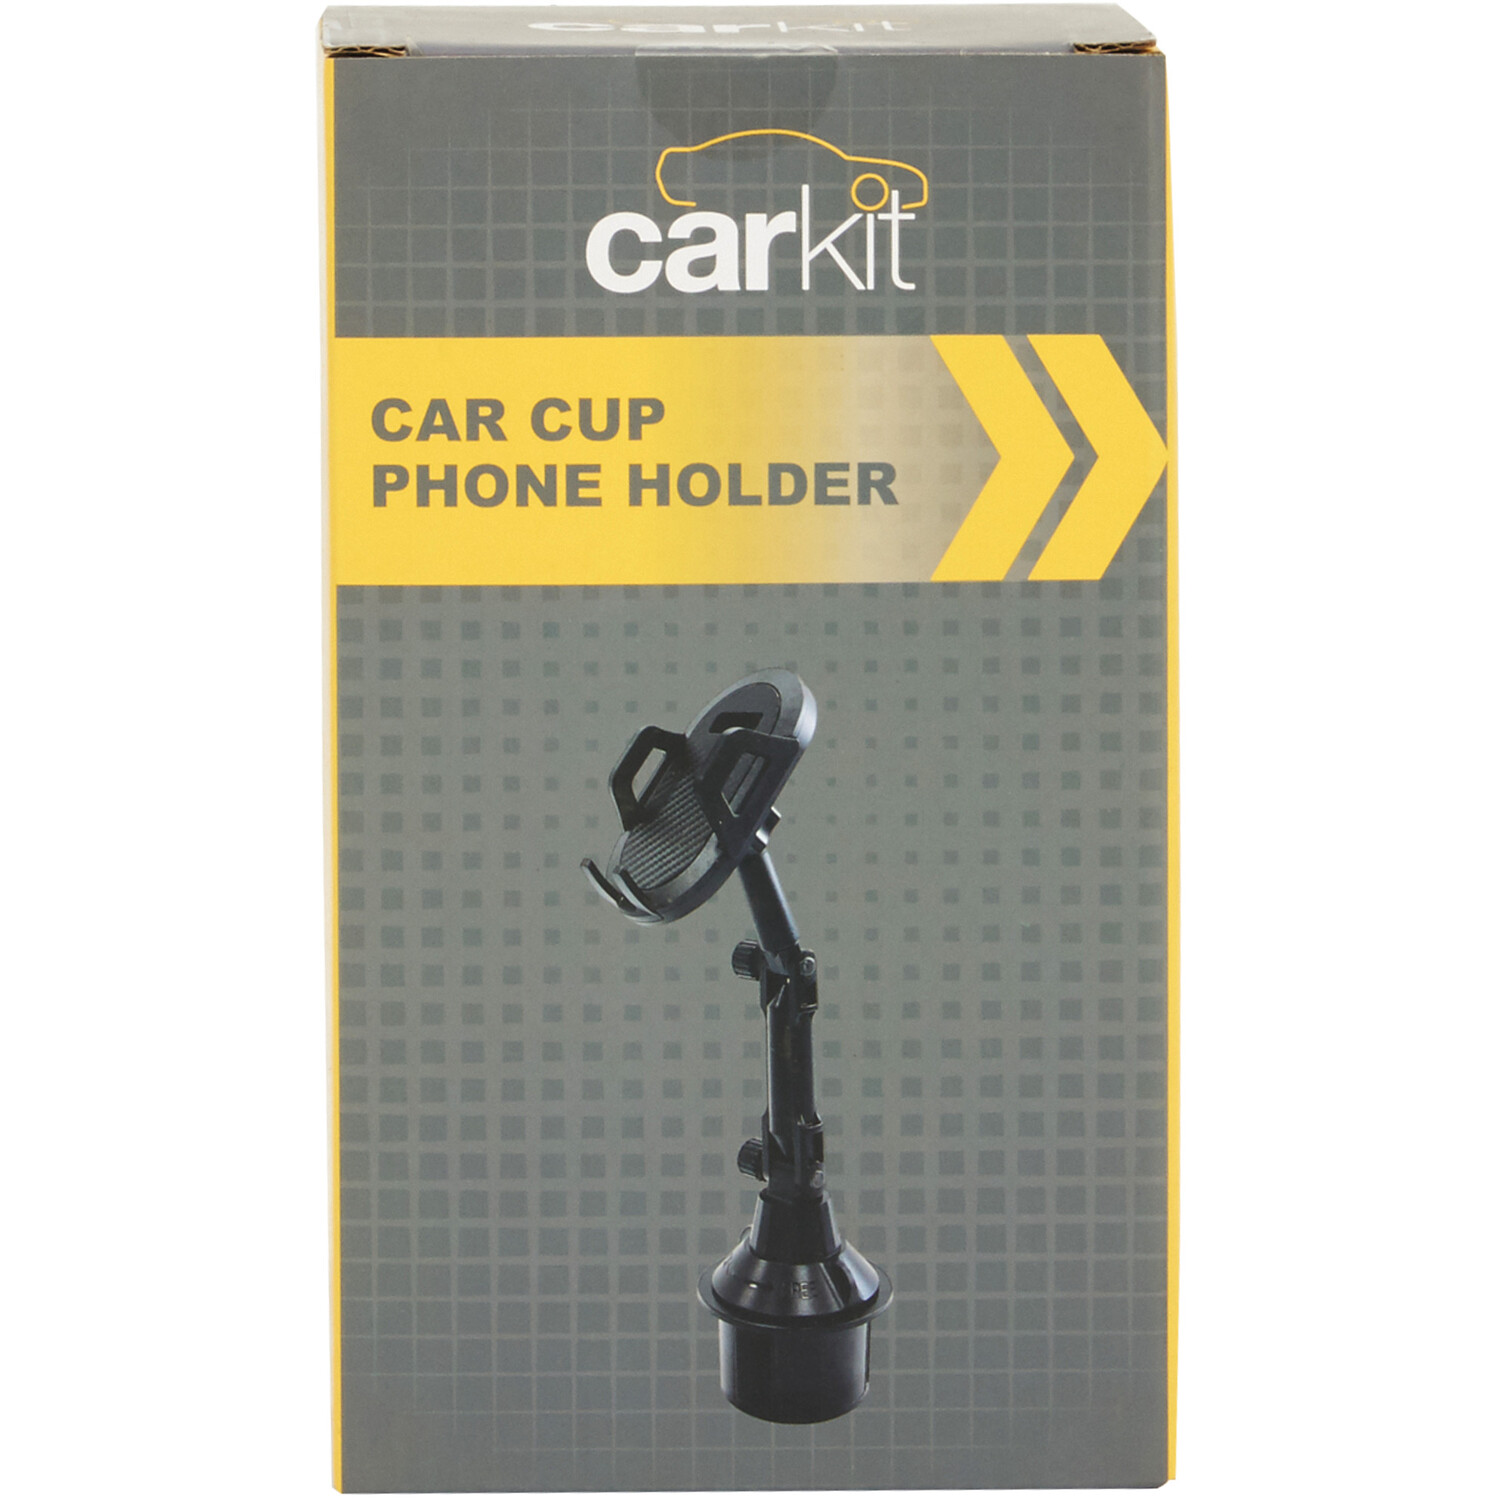 Carkit Car Cup Phone Holder Image 1